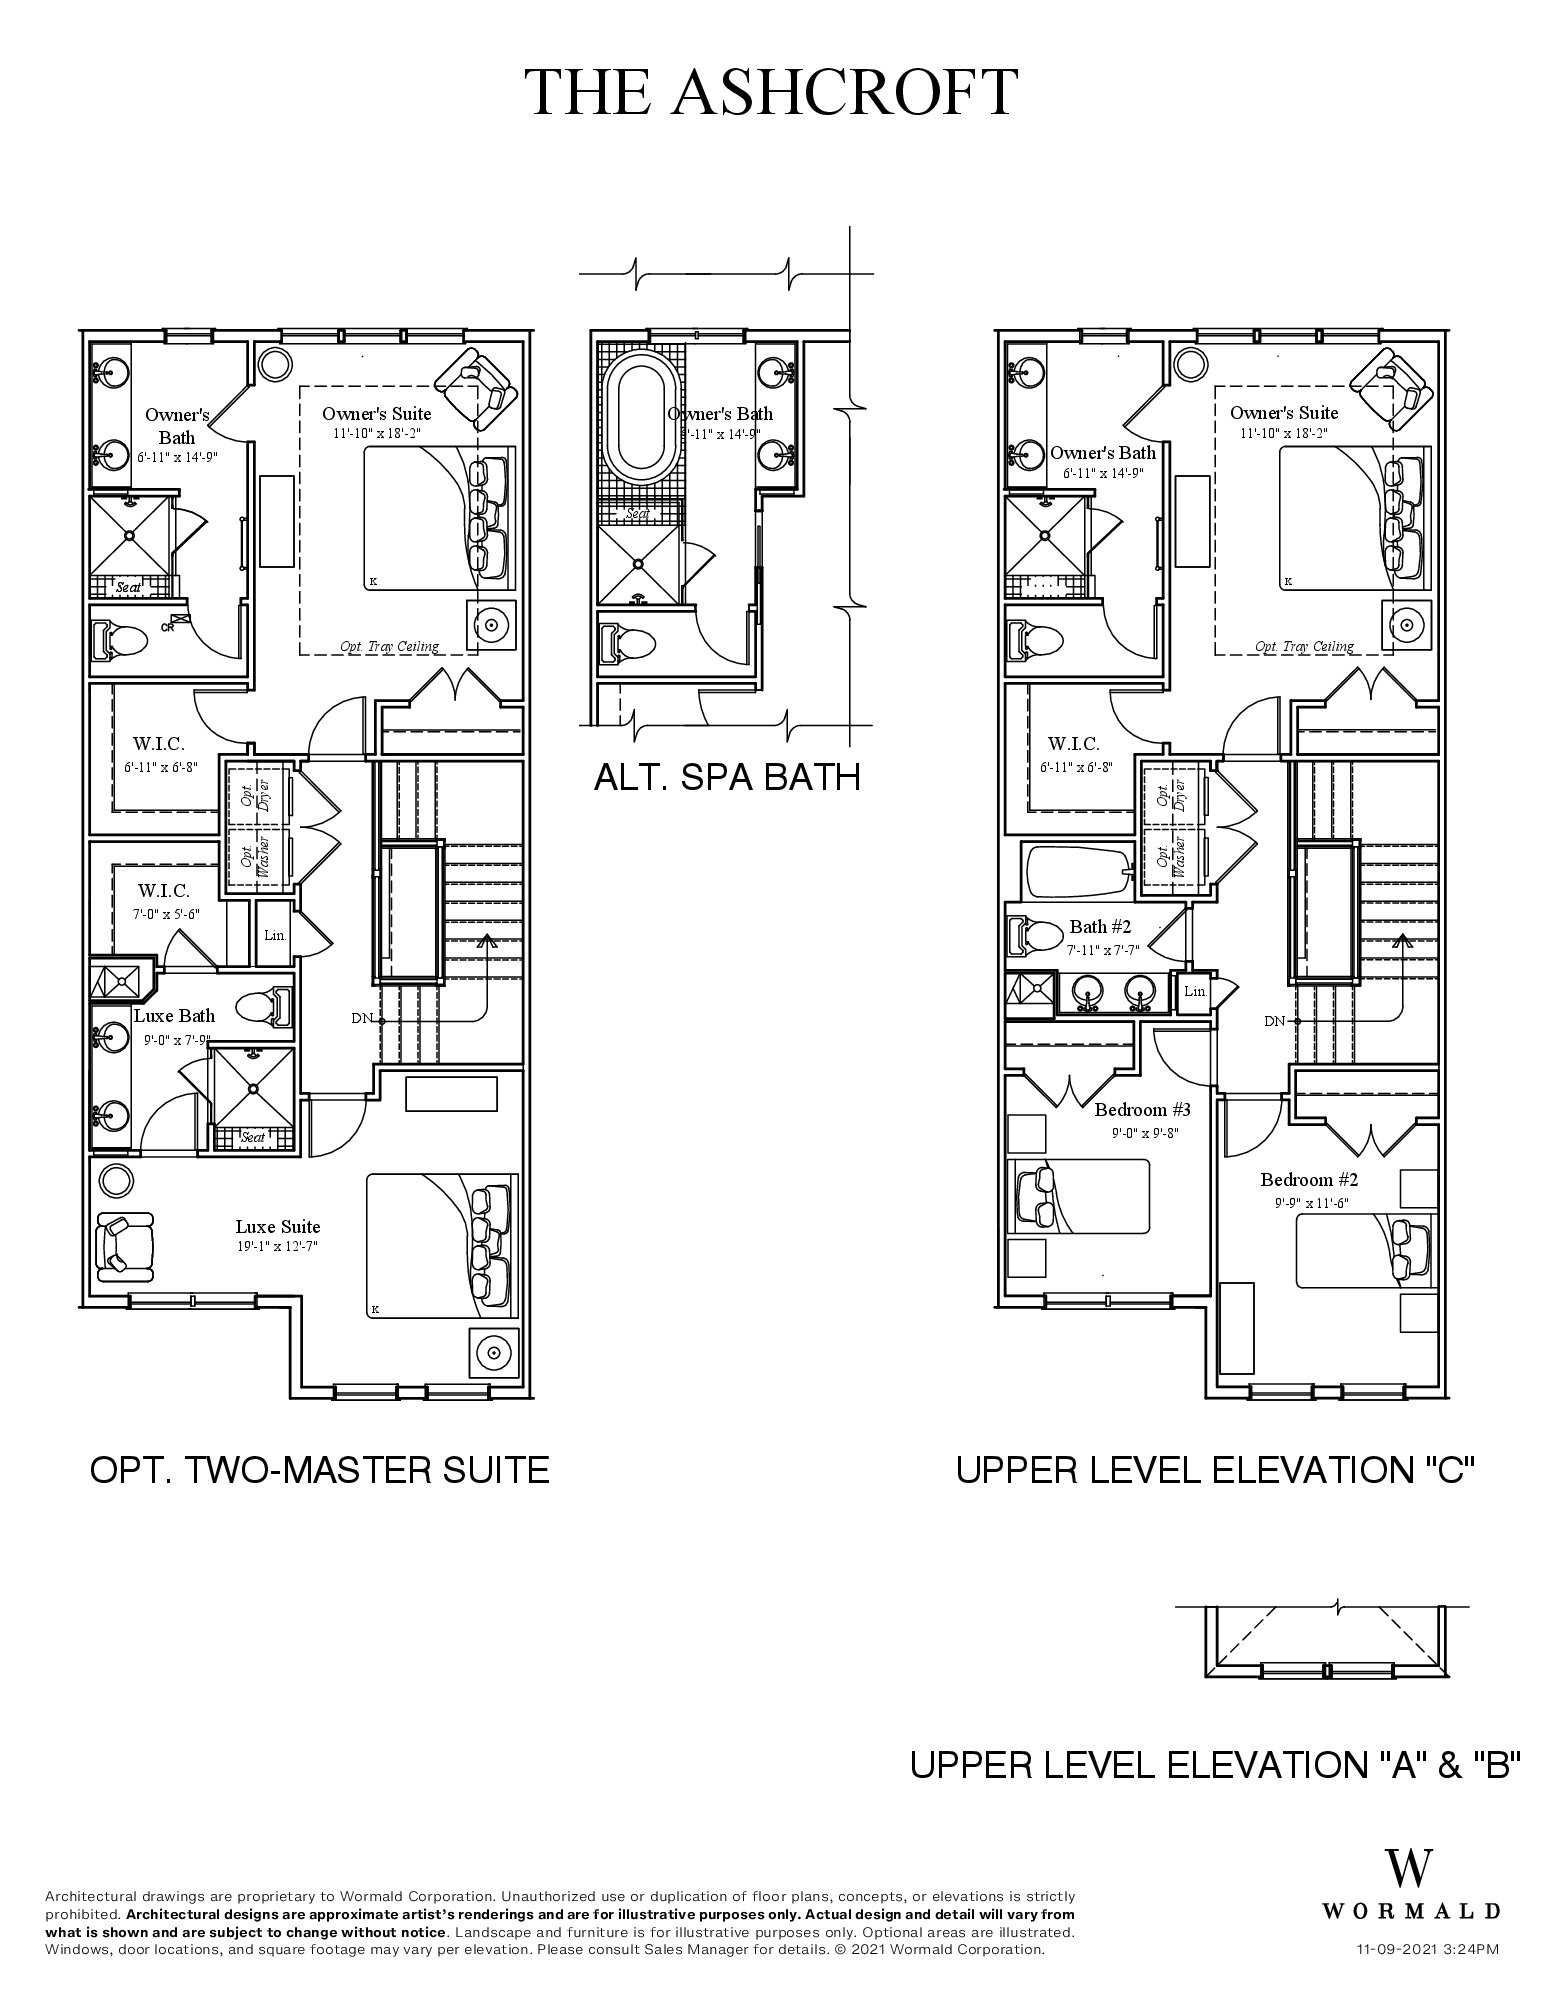 The Ashcroft floor plan 2